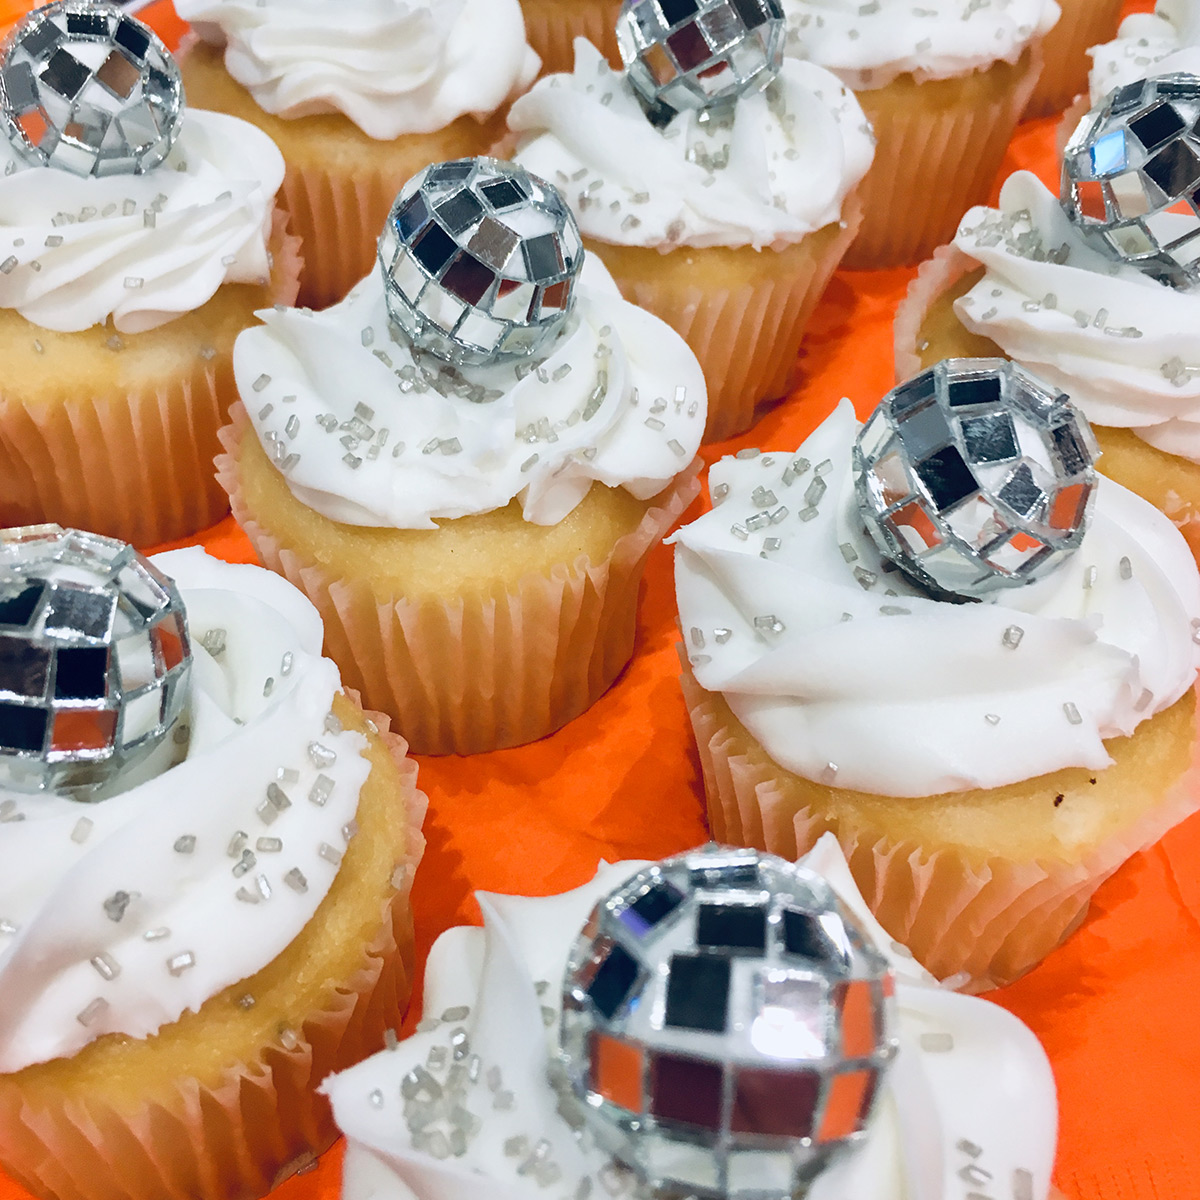 Festive cupcakes with mini disco ball decorations.